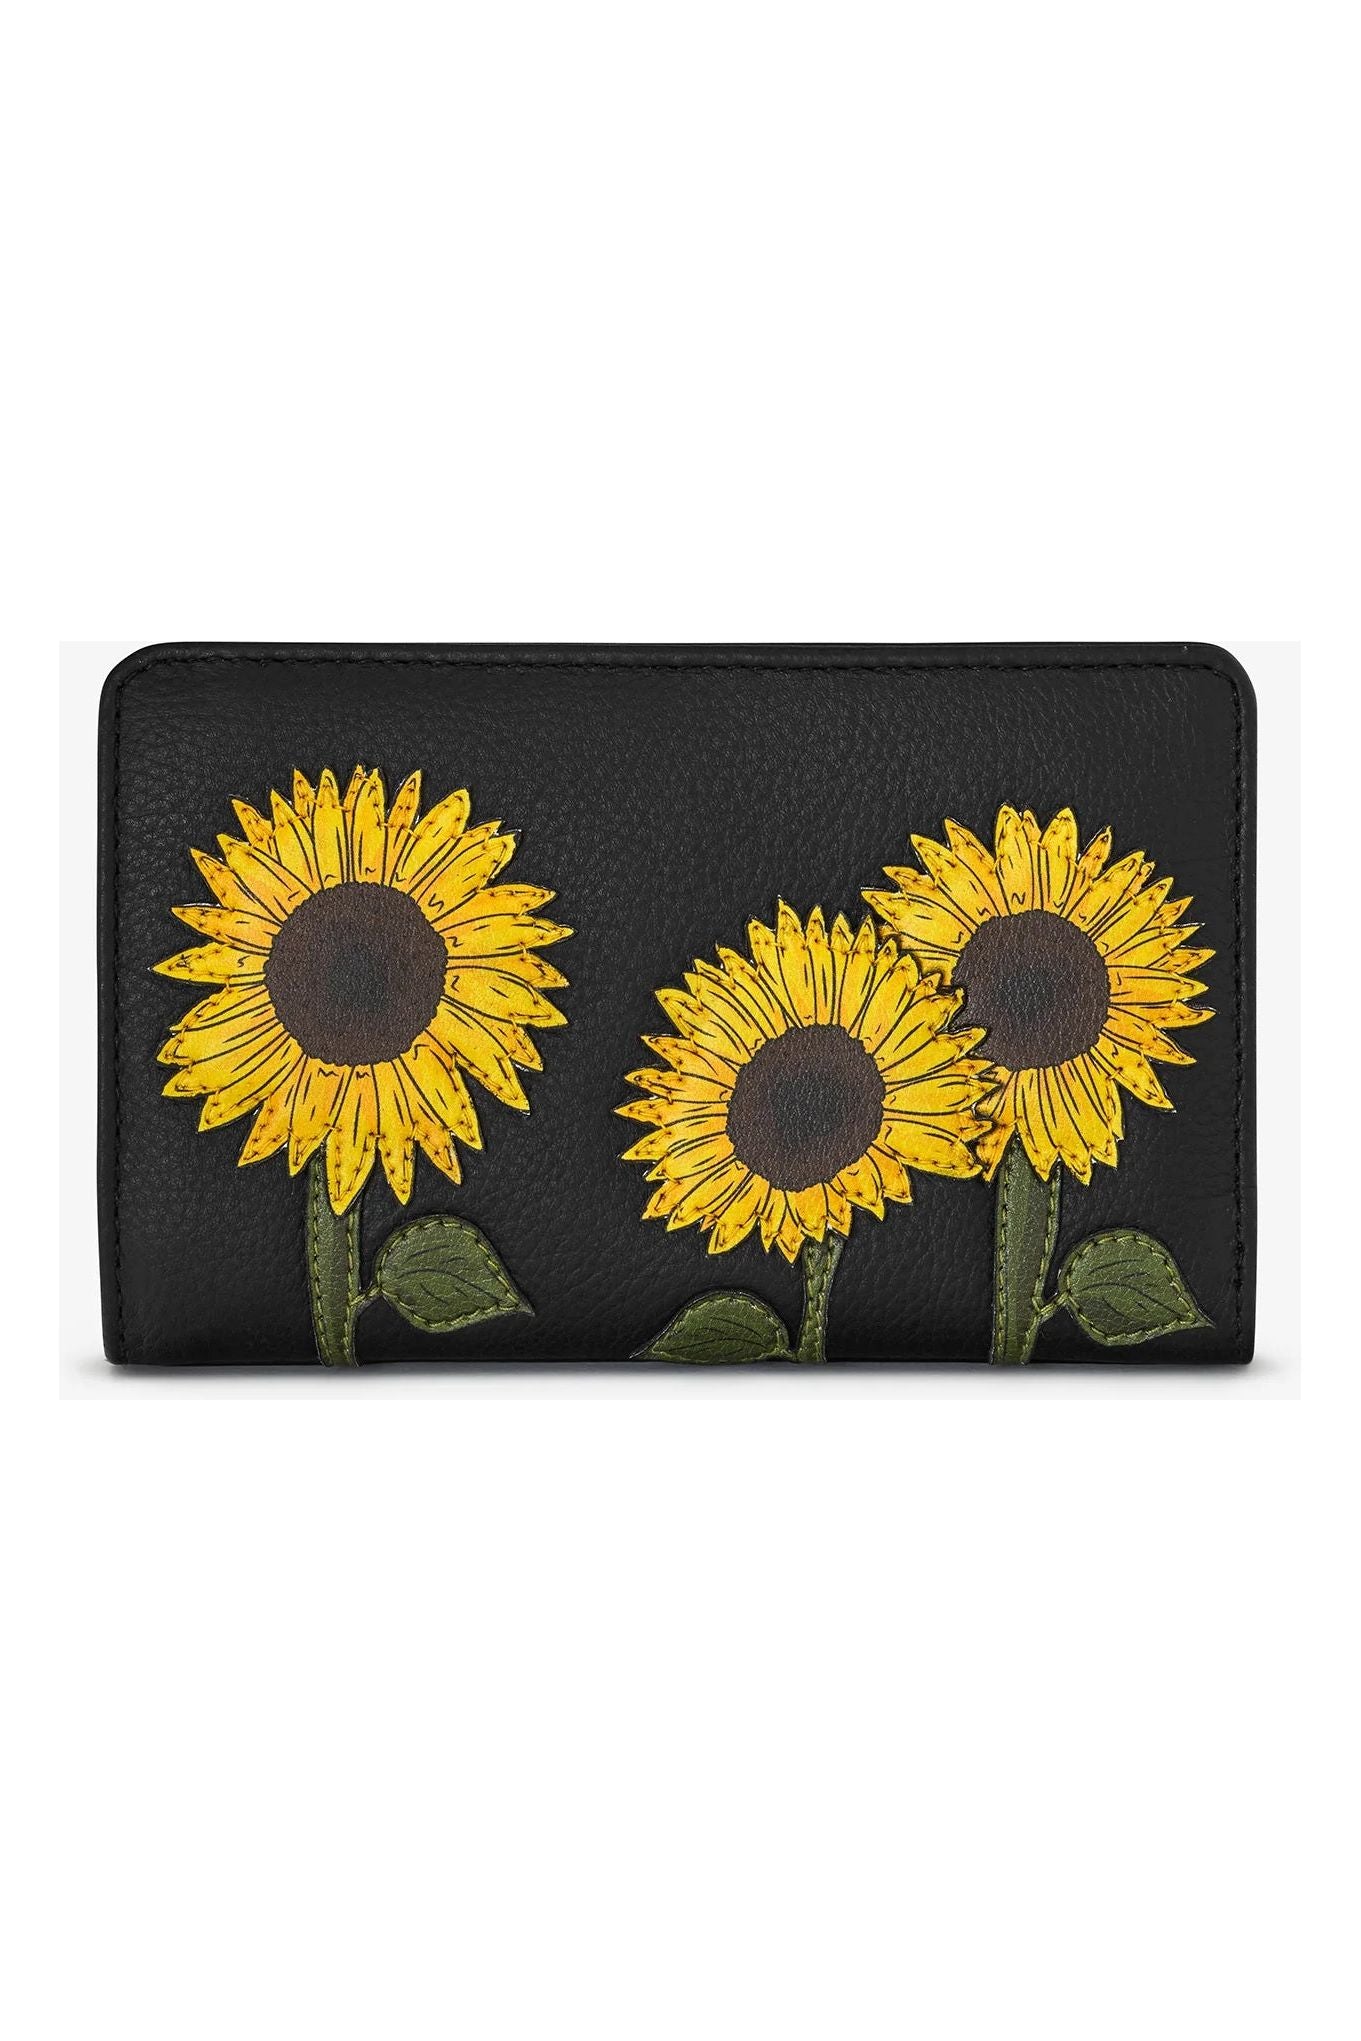 Yoshi Sunflowers zip purse Y1089